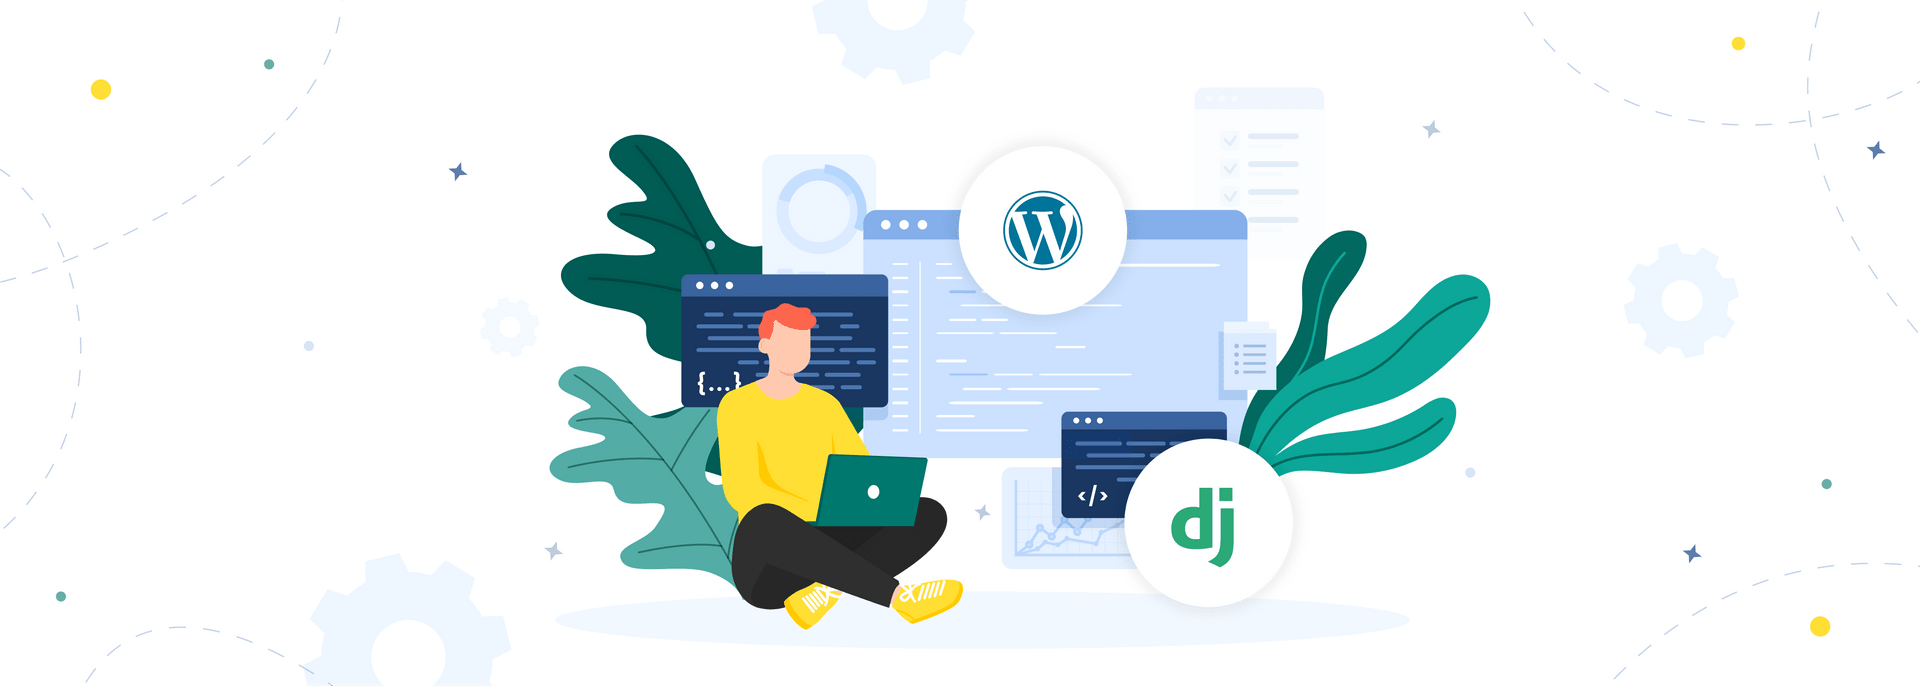 Django vs Wordpress: how to choose